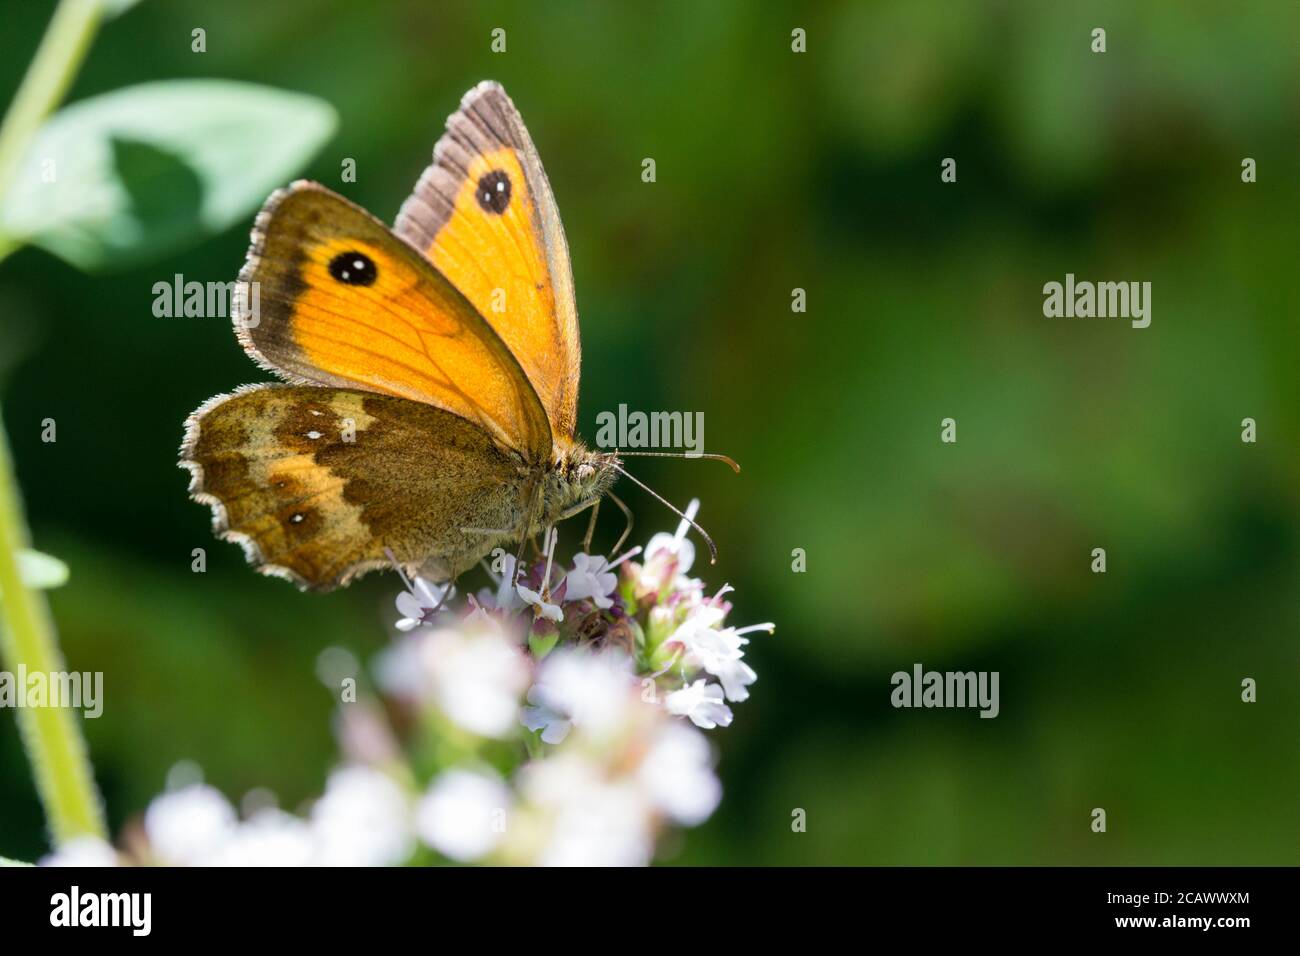 Female UK gatekeeper butterfly, Pyronia tithonus, feeding on marjoram flowers in a UK garden Stock Photo